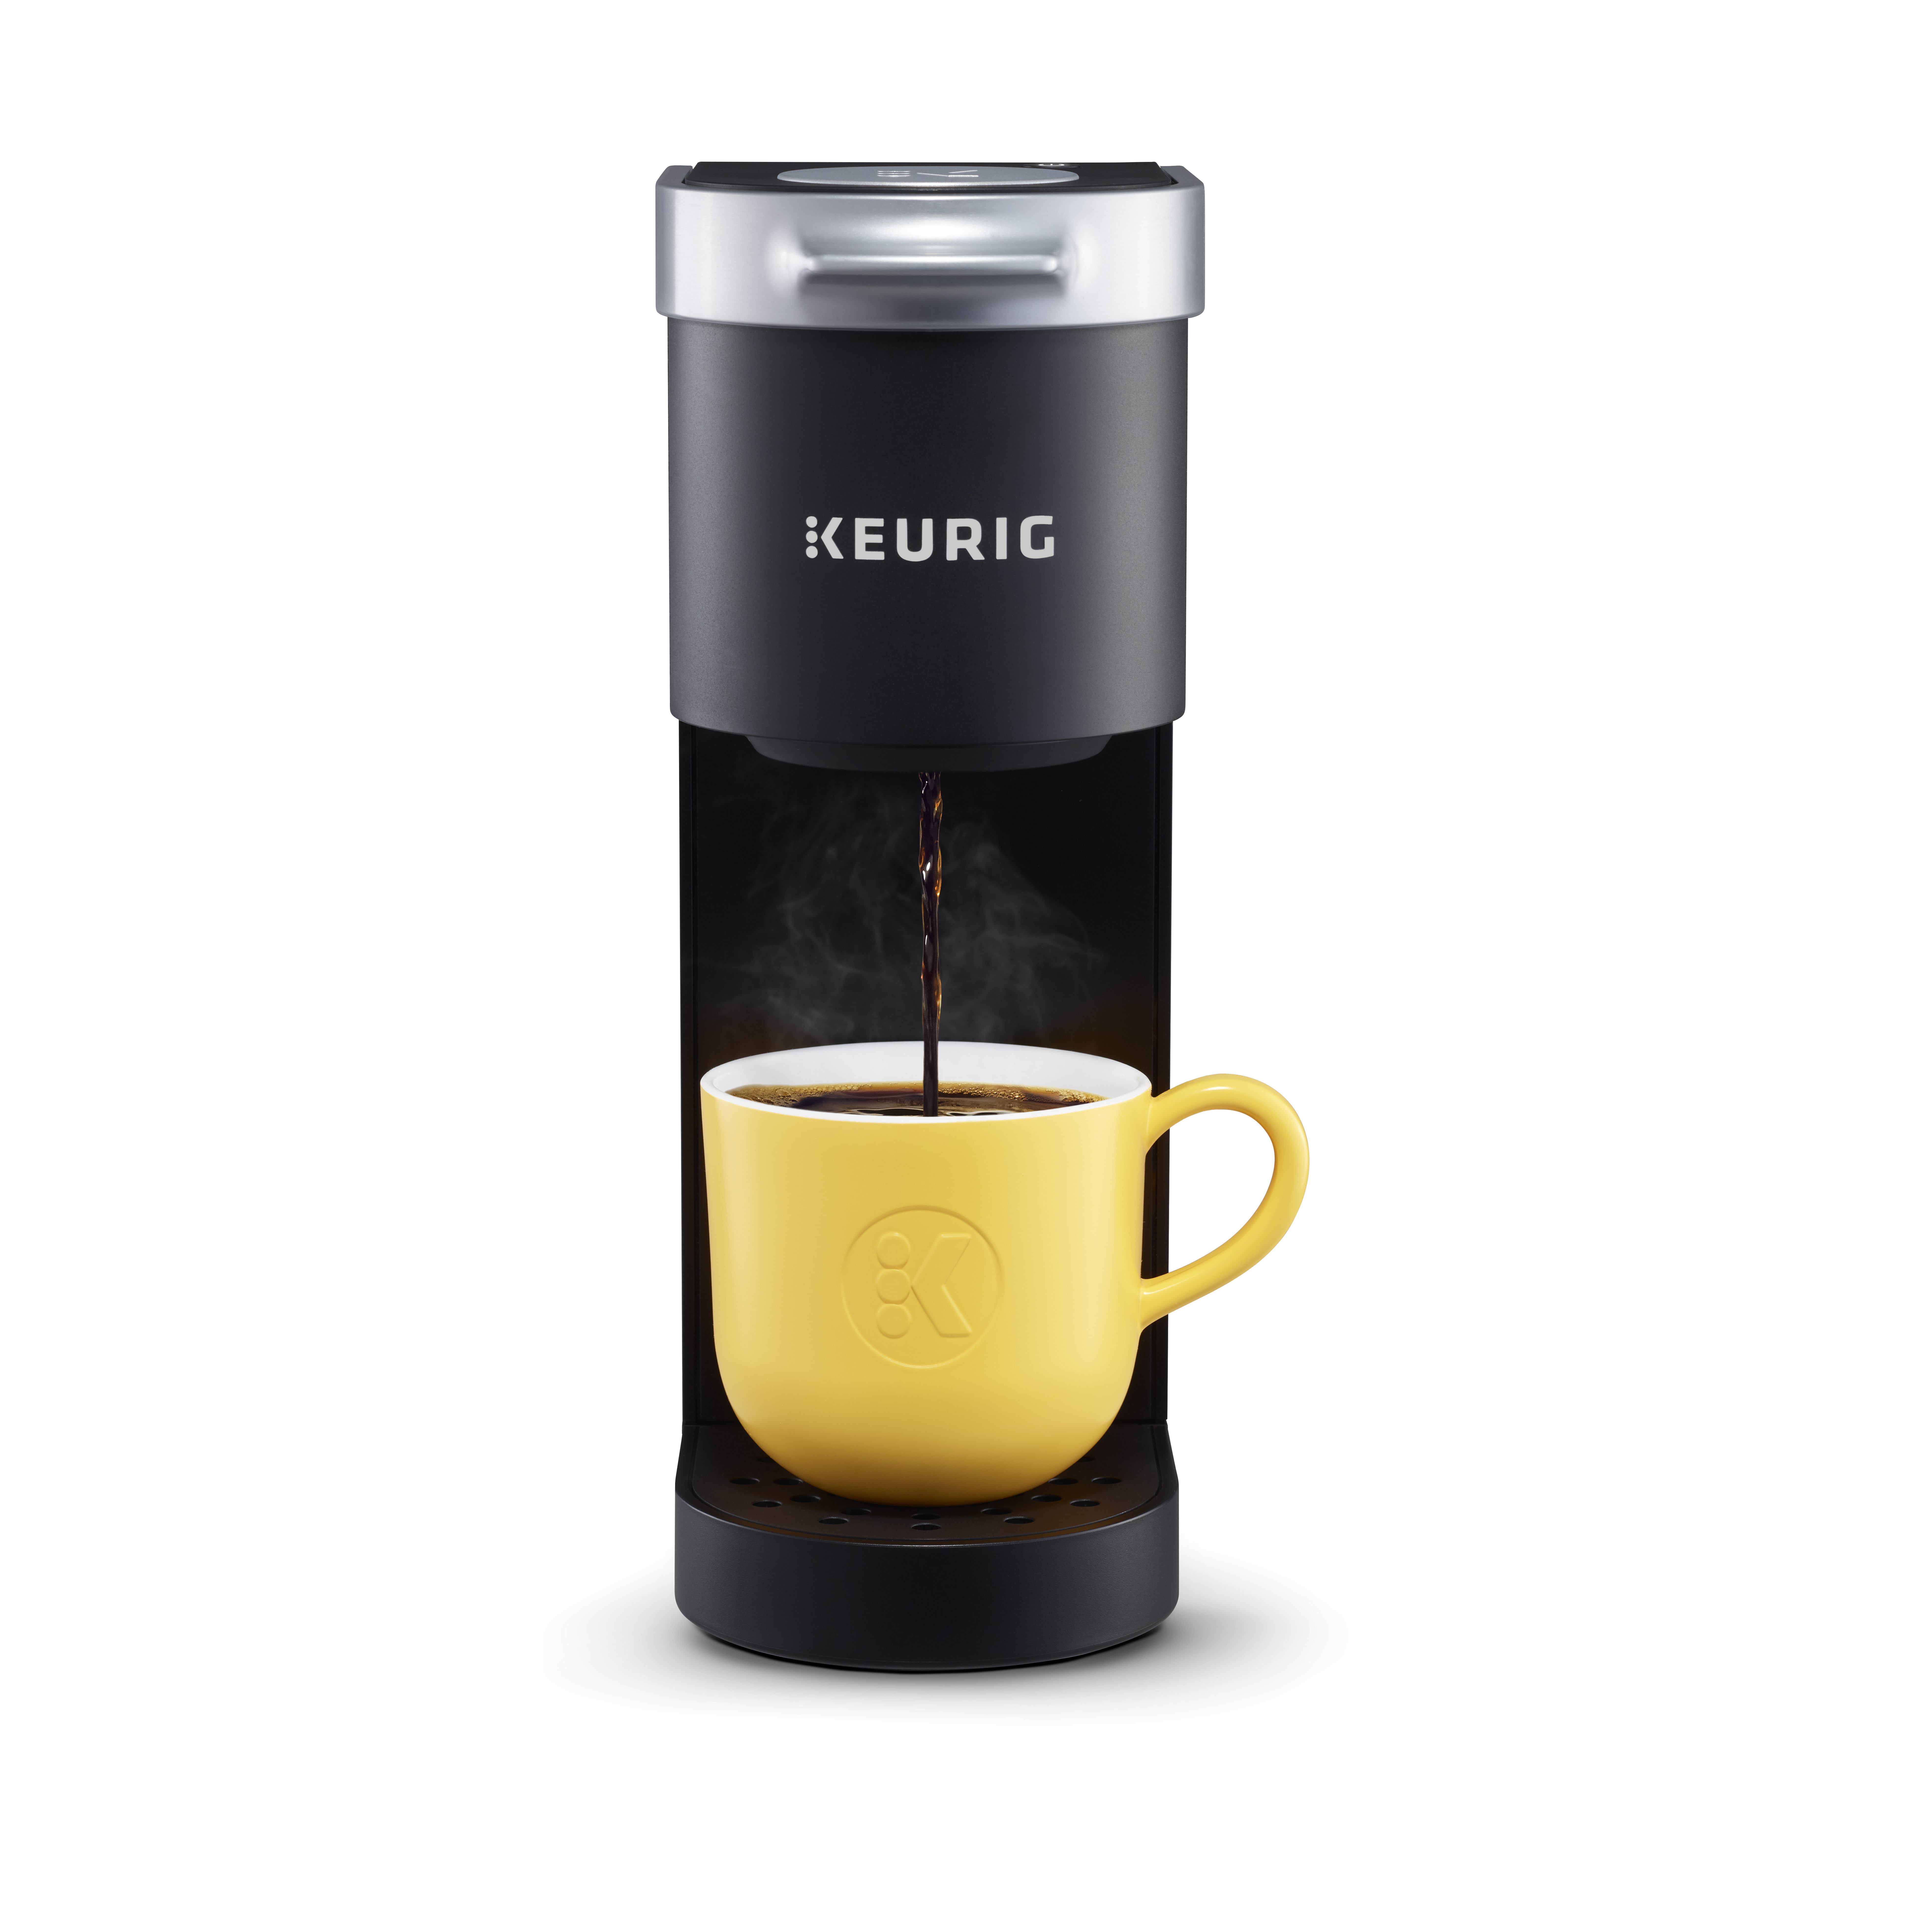 Keurig K-Mini Single Serve Coffee Maker, Black - image 1 of 21